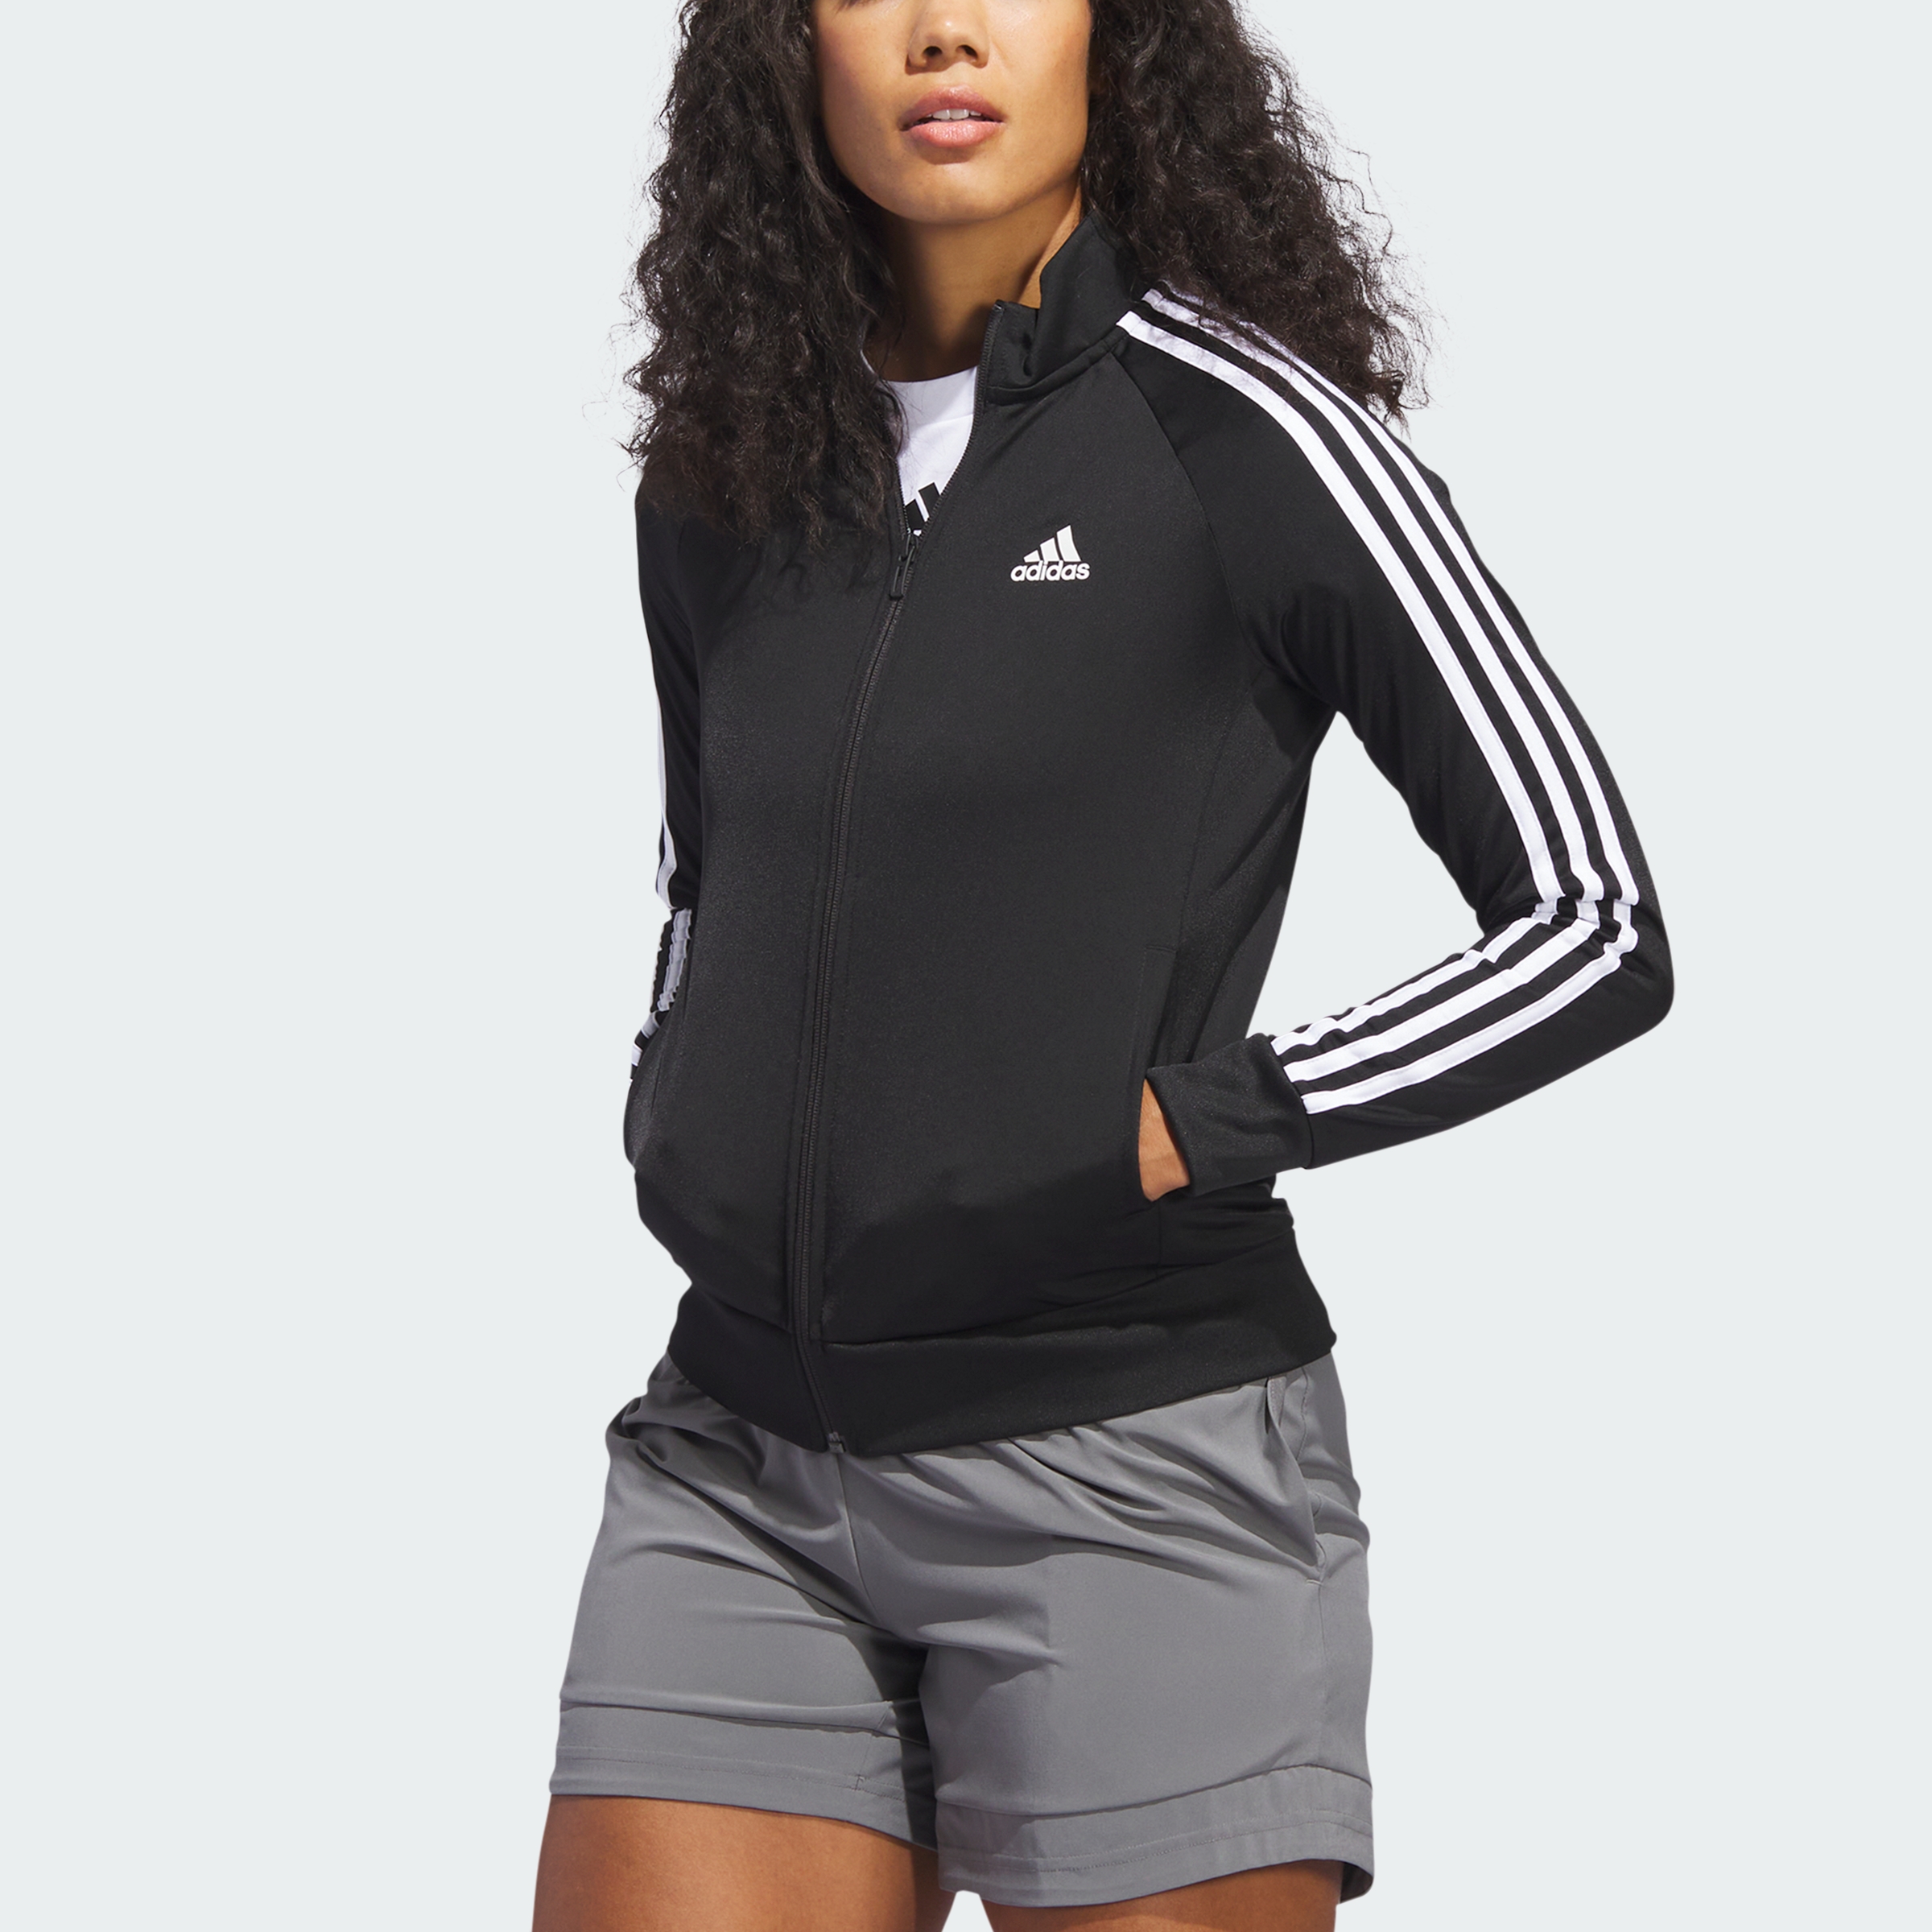 Woman’s Adidas Track Jacket Size Medium